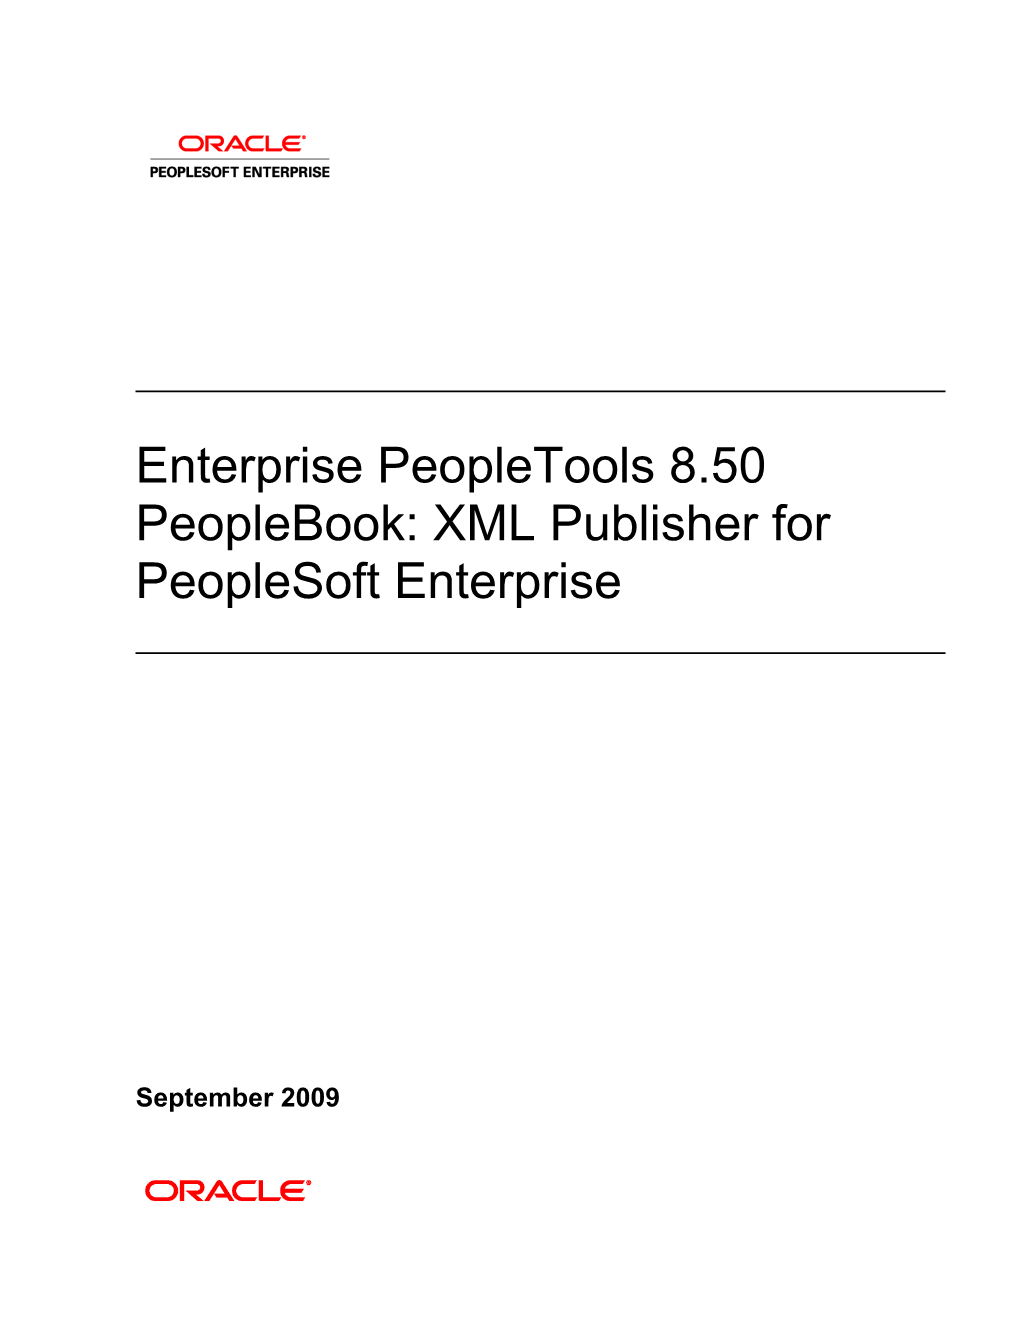 Enterprise Peopletools 8.50 Peoplebook: XML Publisher for Peoplesoft Enterprise